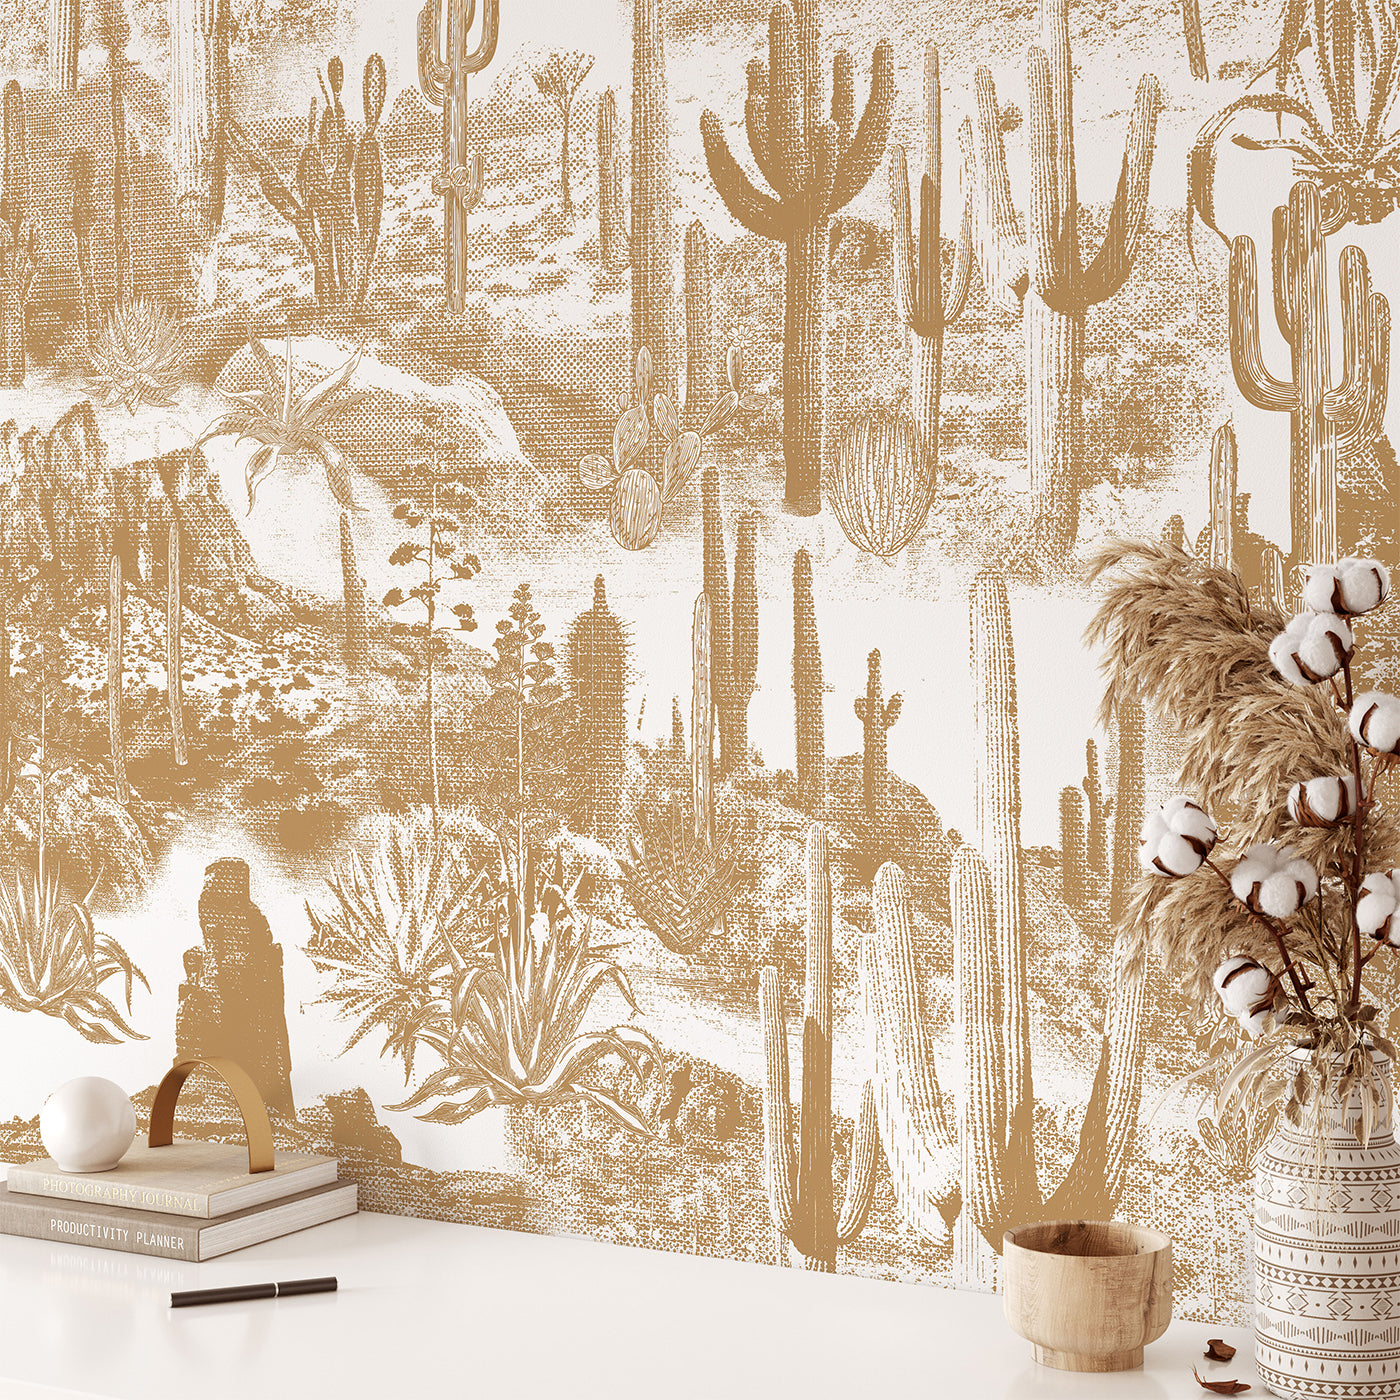 Cactus Landscape Boho Wallpaper - Alternative view 1